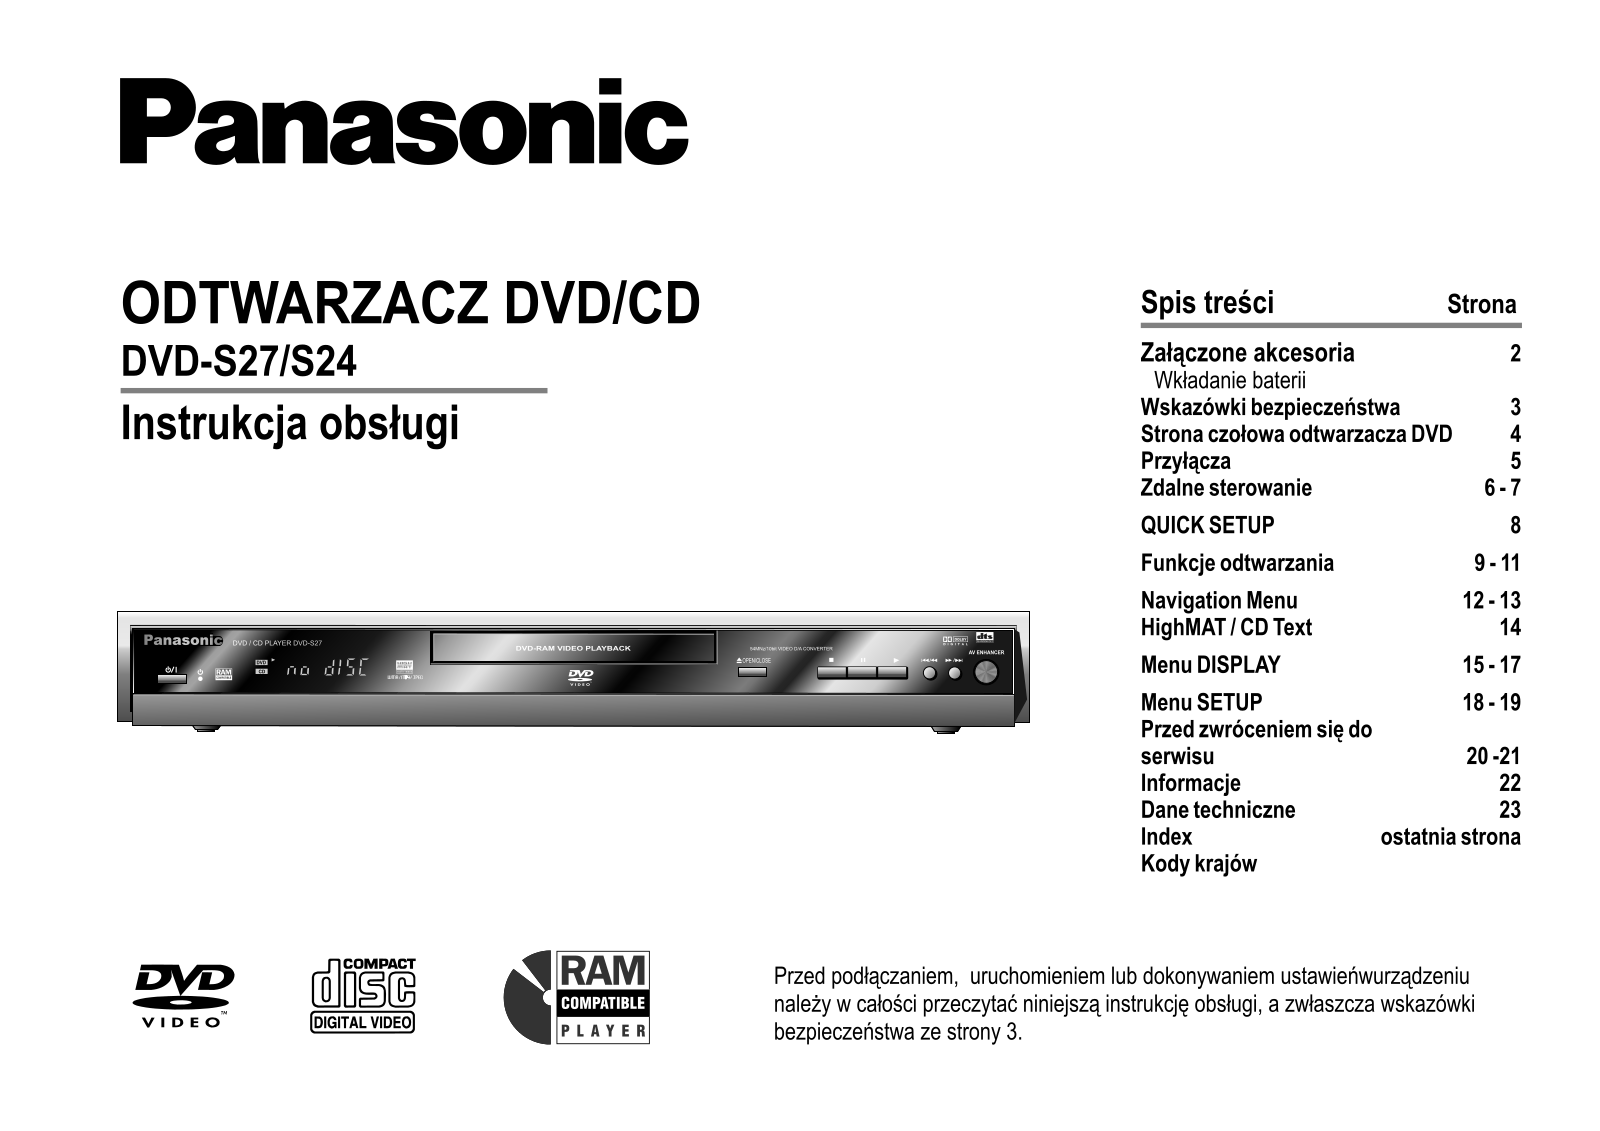 Panasonic DVD-S27, DVD-S24 User Manual